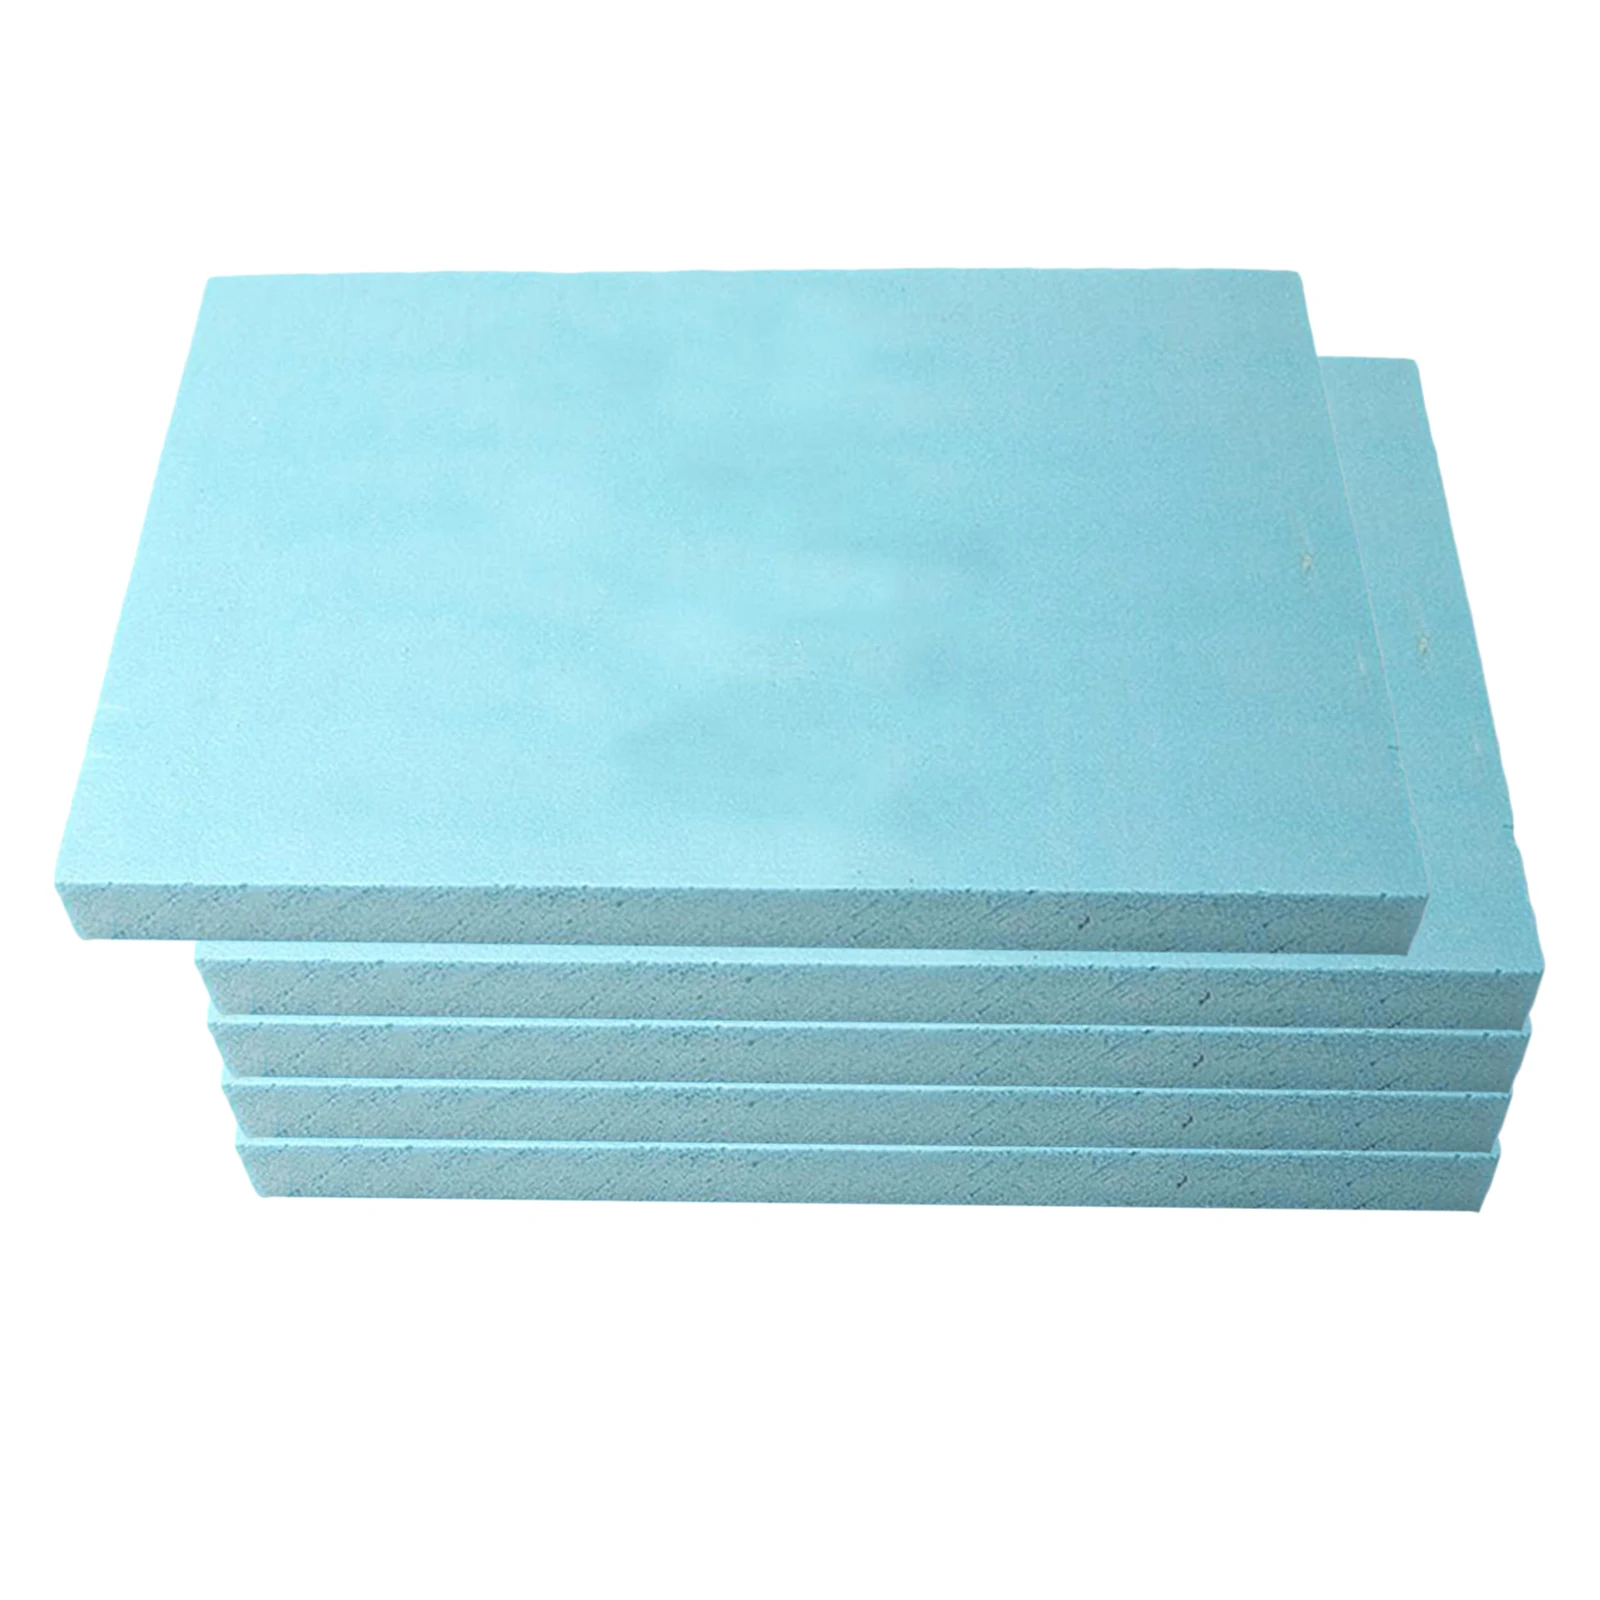 5 Piece Blue Foam Slab Board DIY Crafts Modelling Building Scenic Terrain Kit, 295x395x30mm